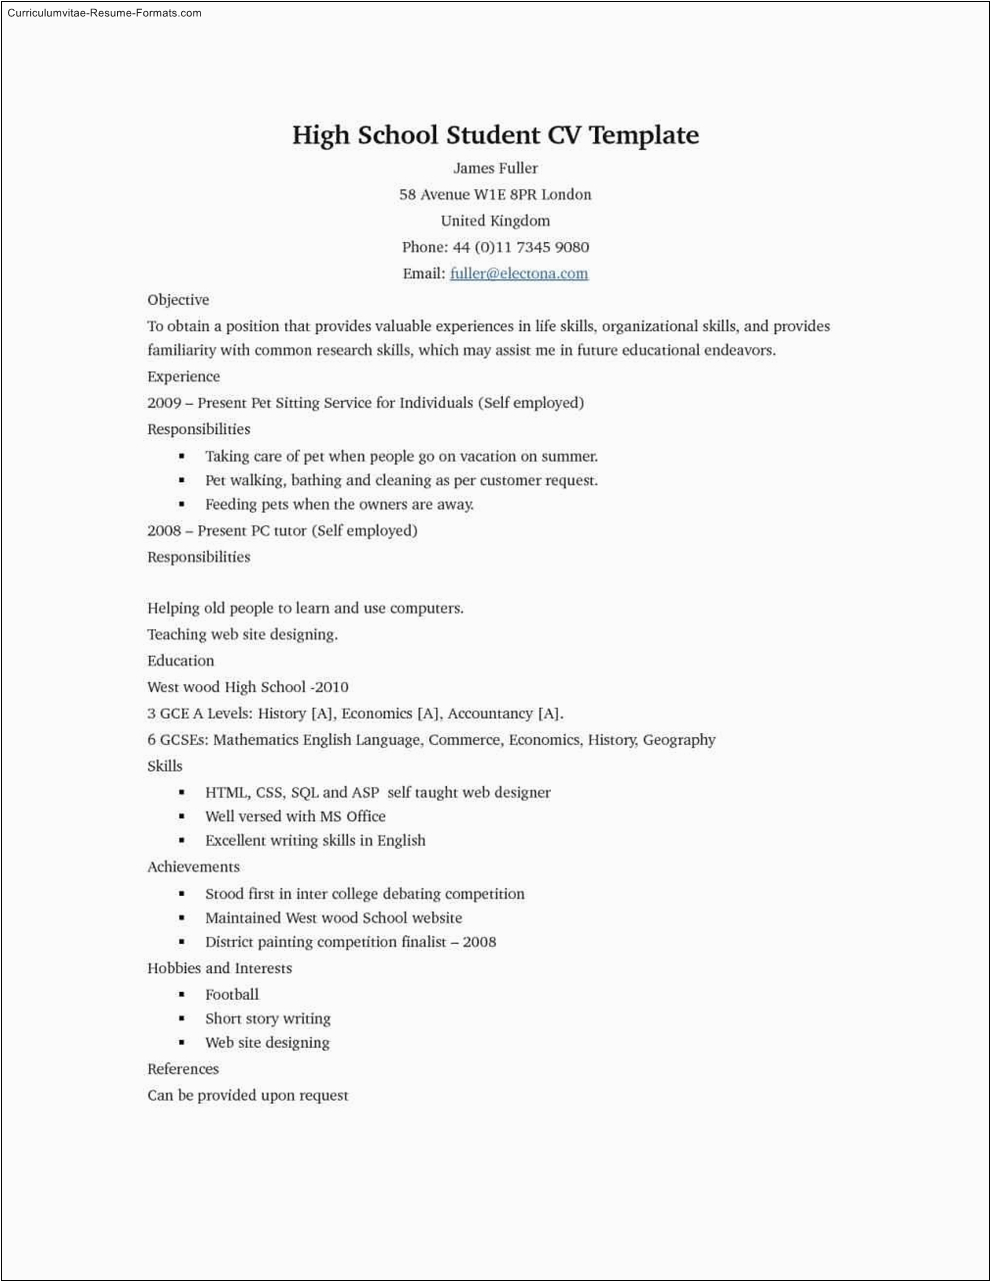 Printable Resume Template for High School Students High School Student Resume Template